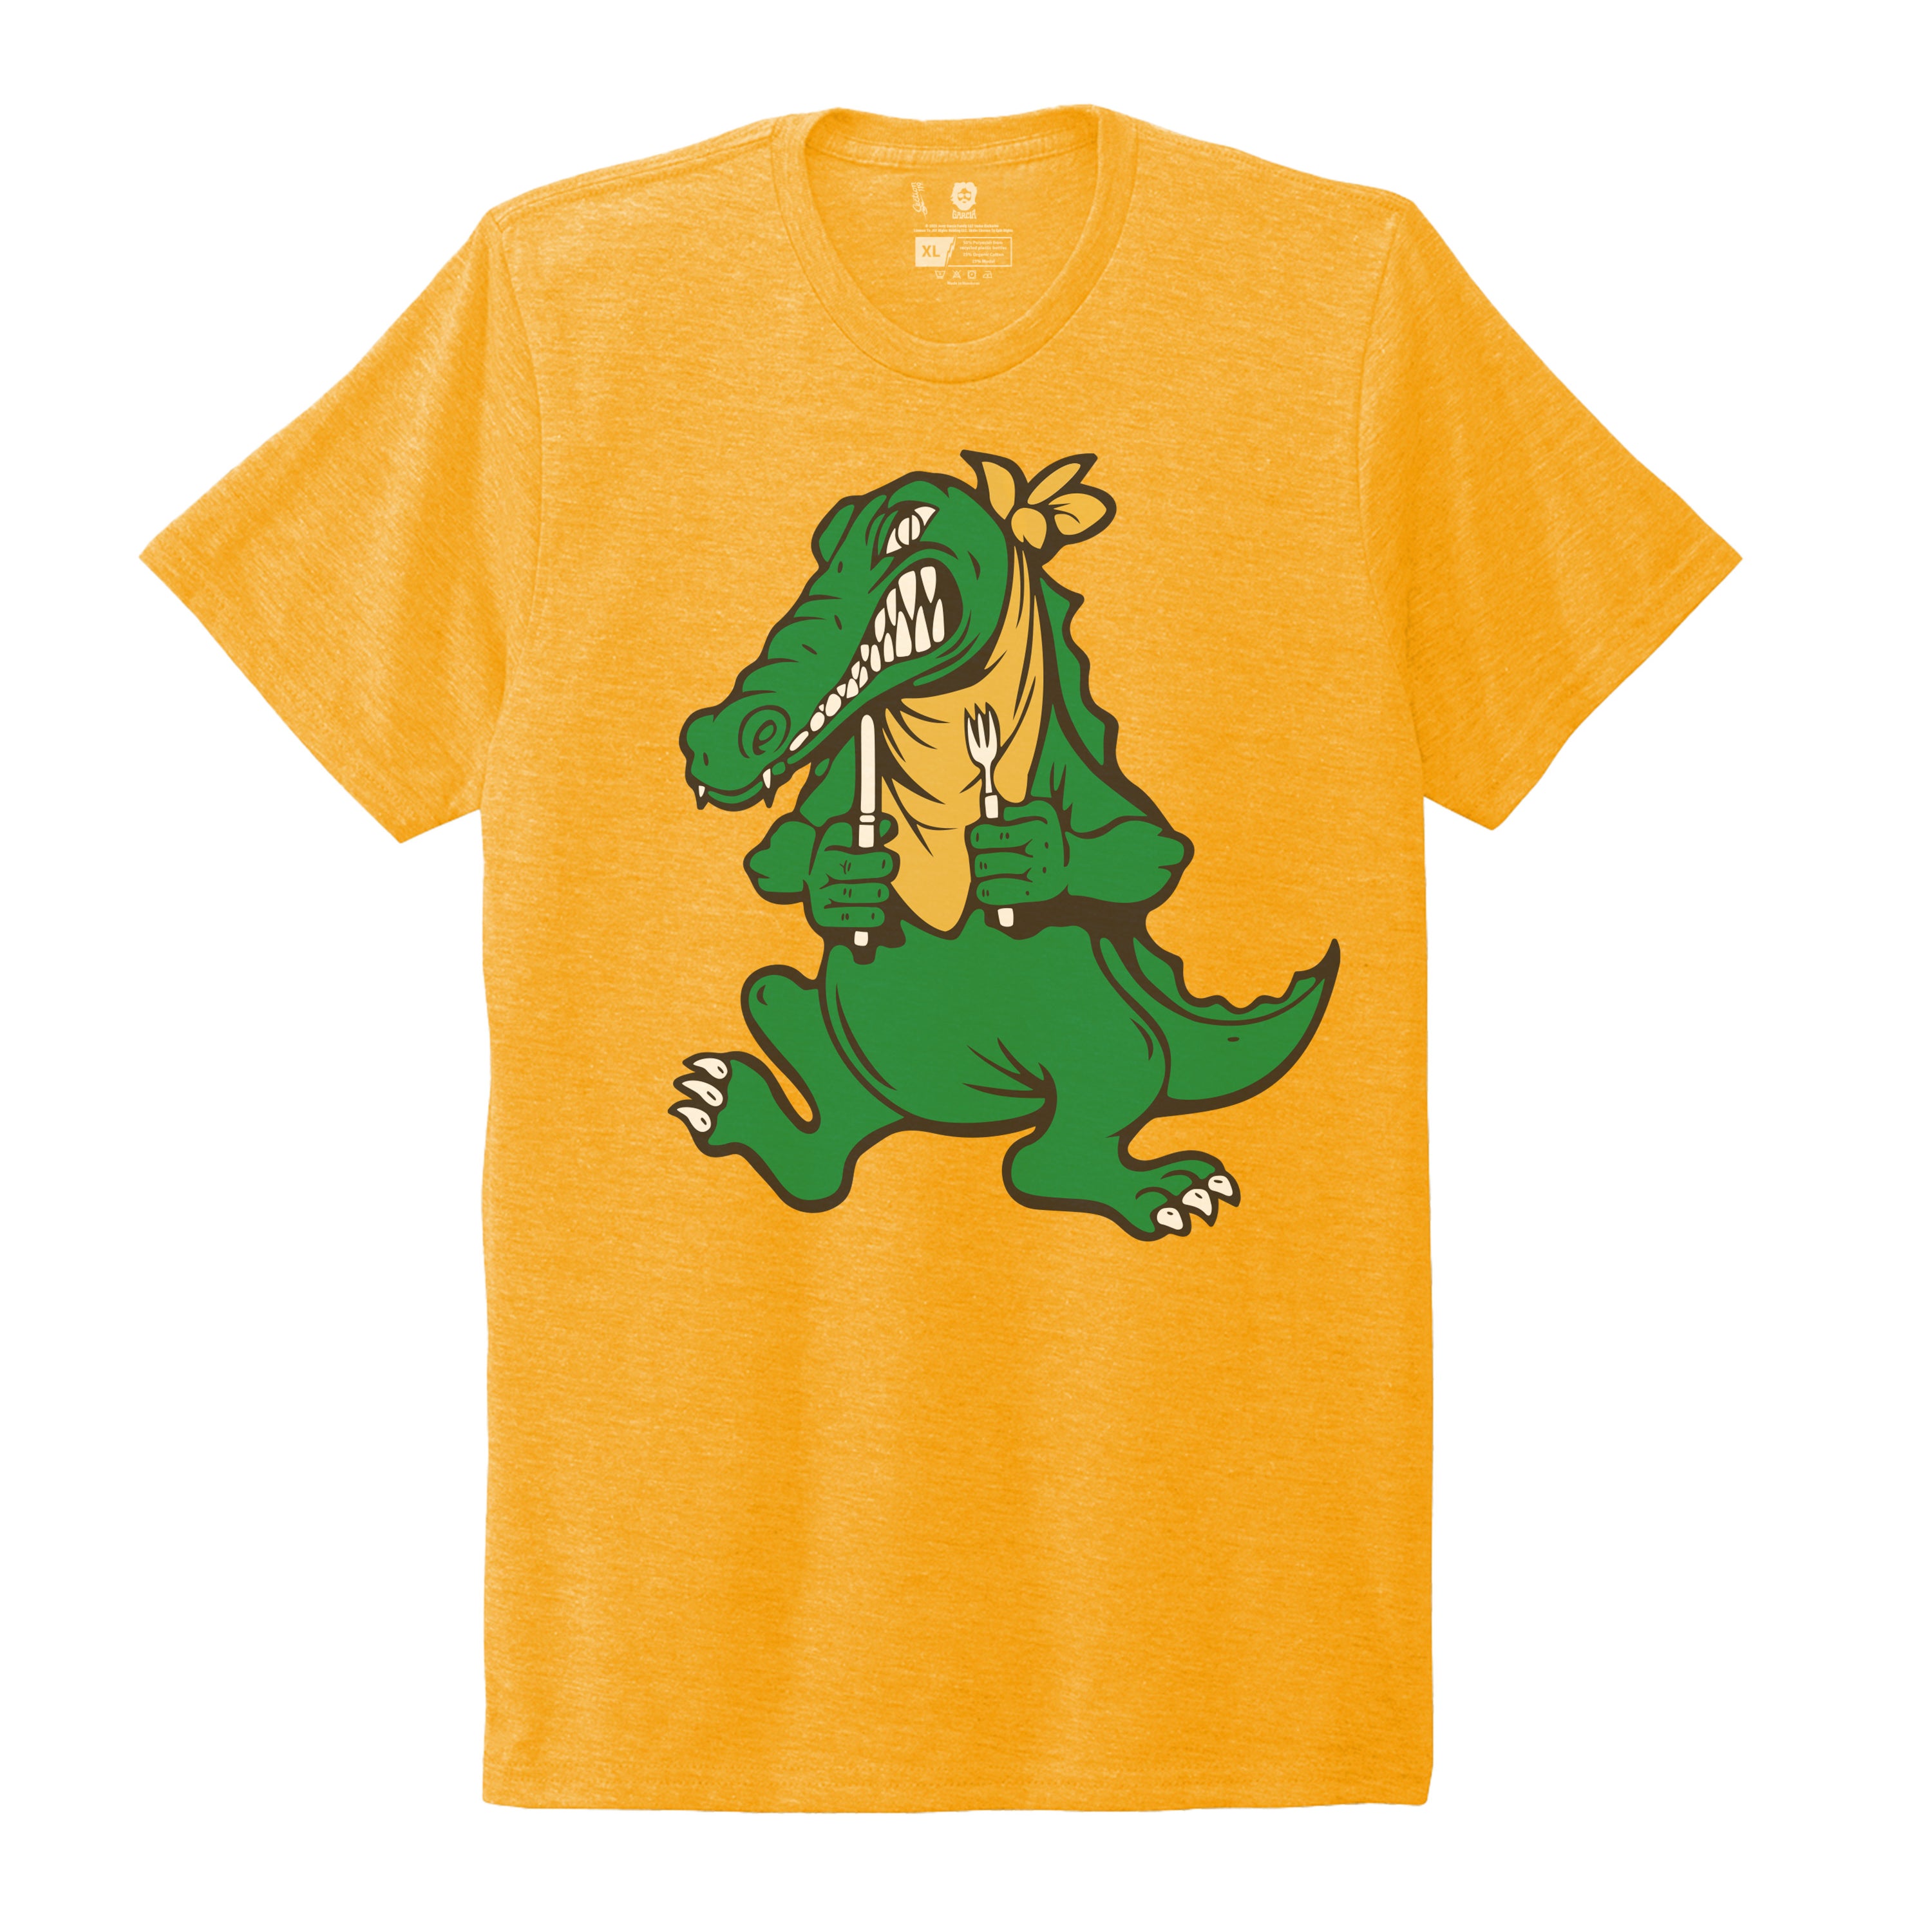 Jerry Garcia Eco T-Shirt Yellow Orange Alligator - Section 119